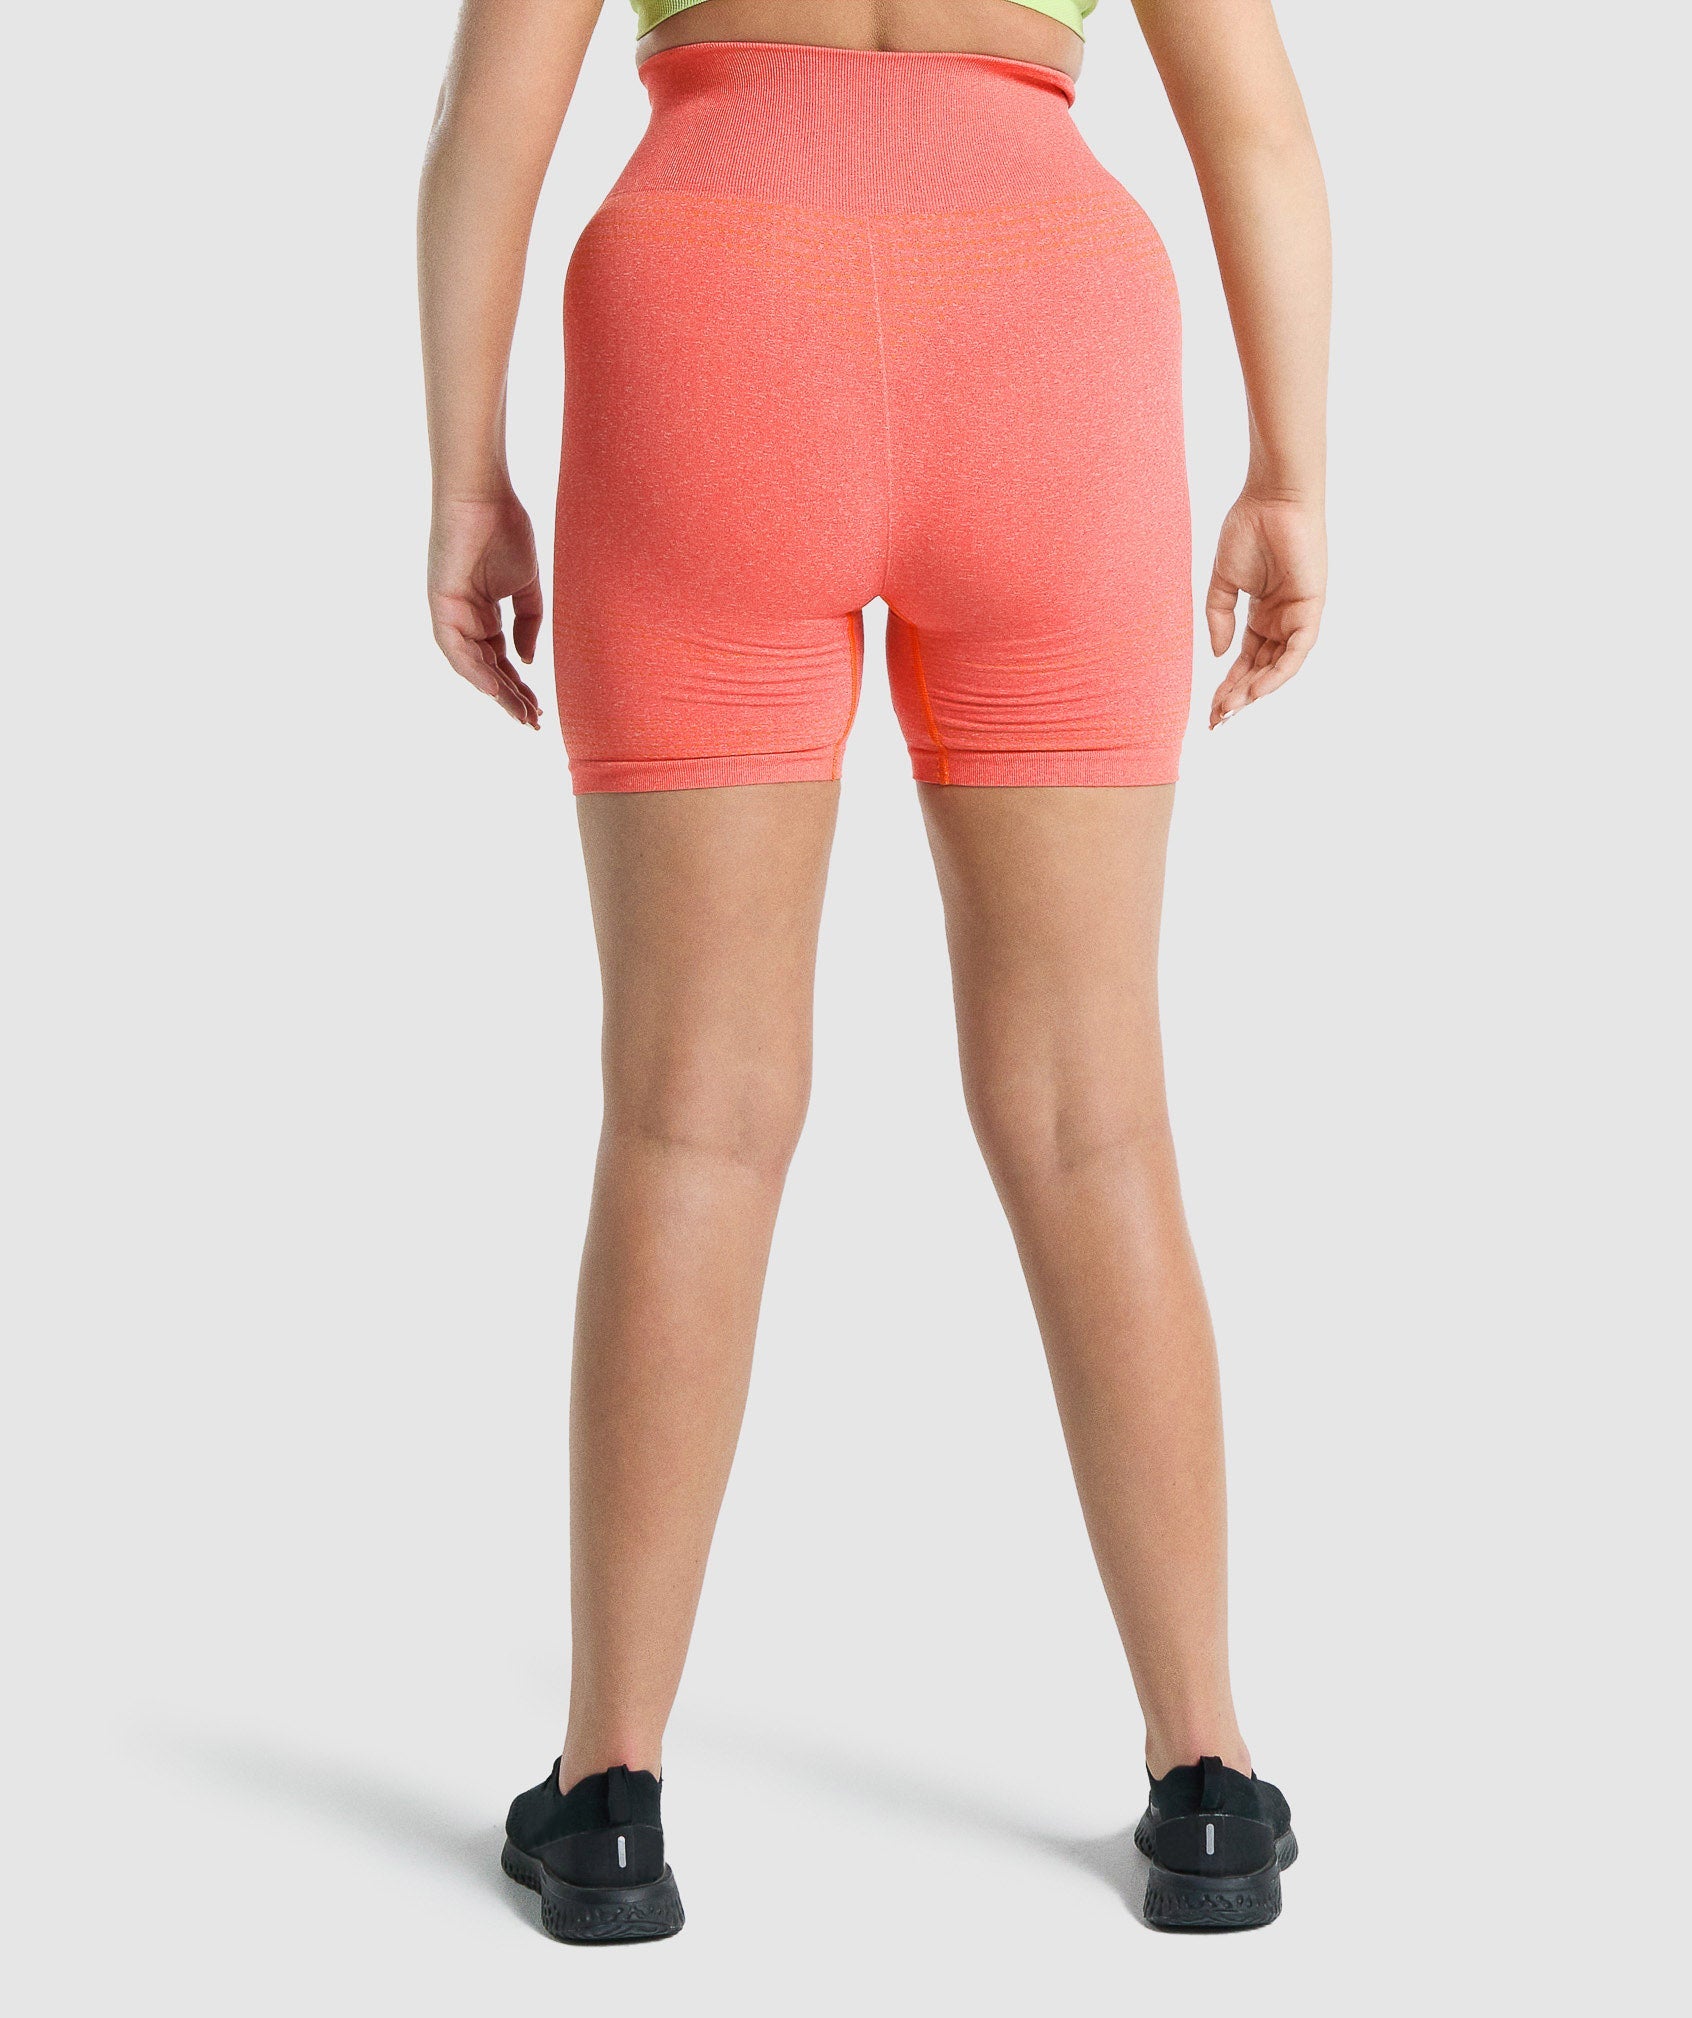 Gymshark Vital 2.0 Leggings Orange Marl - $39 (35% Off Retail